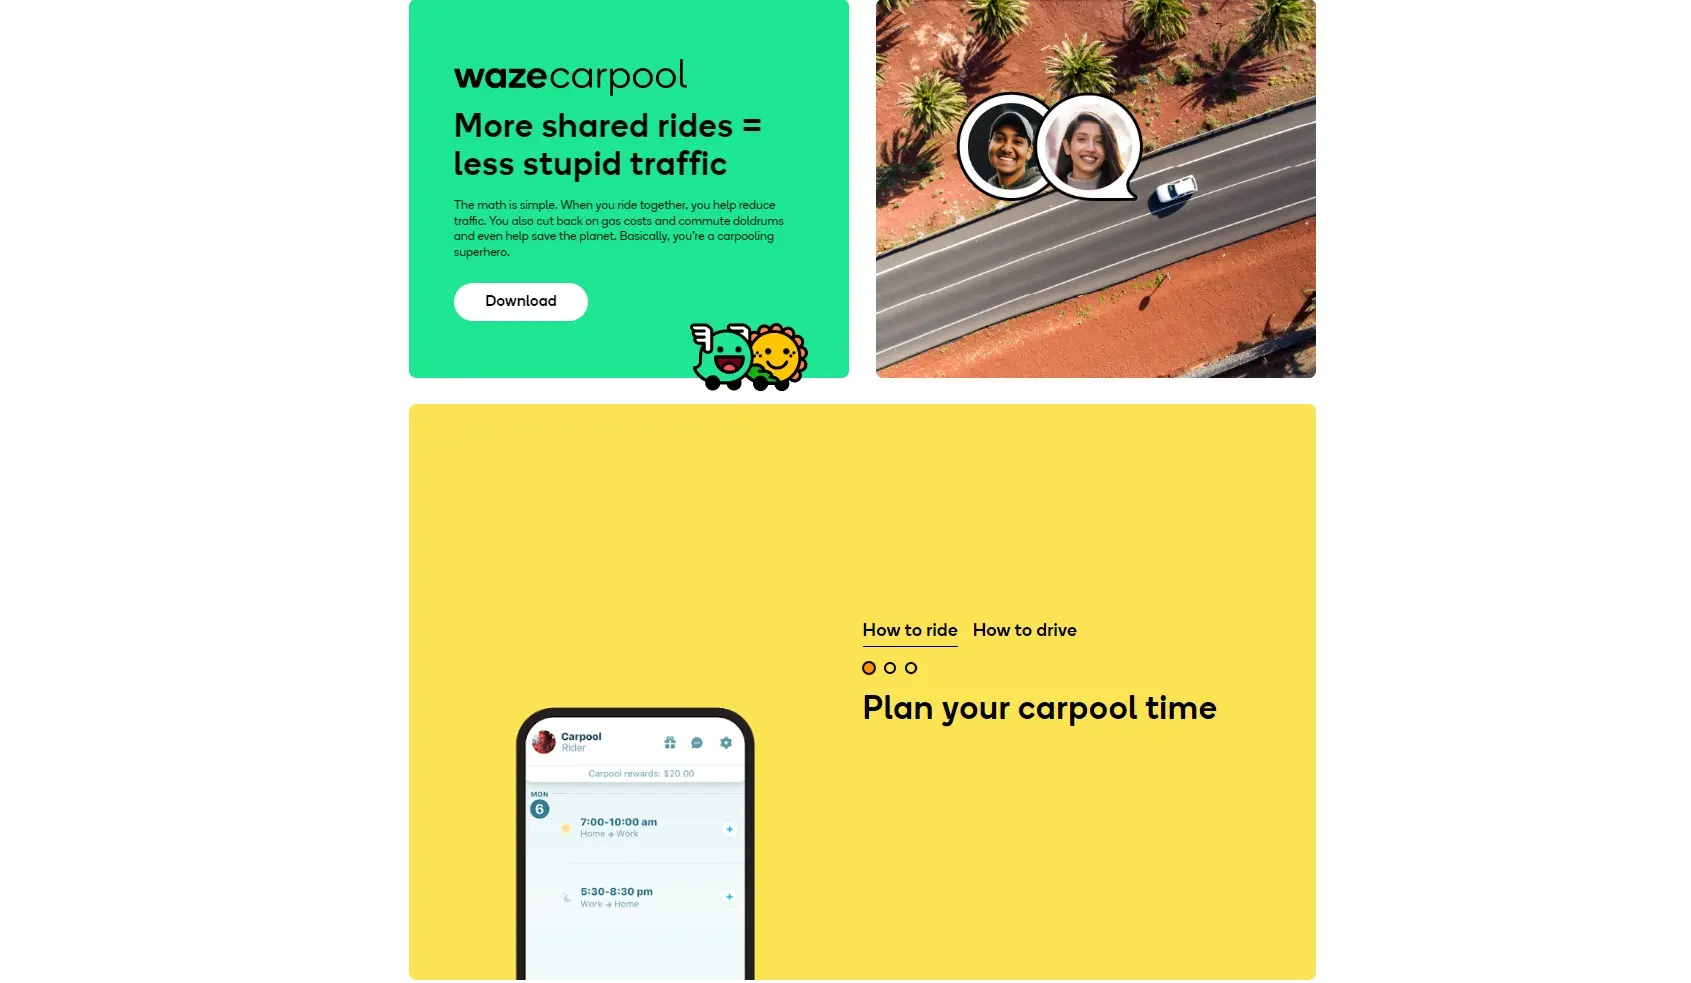 Google Waze Carpool